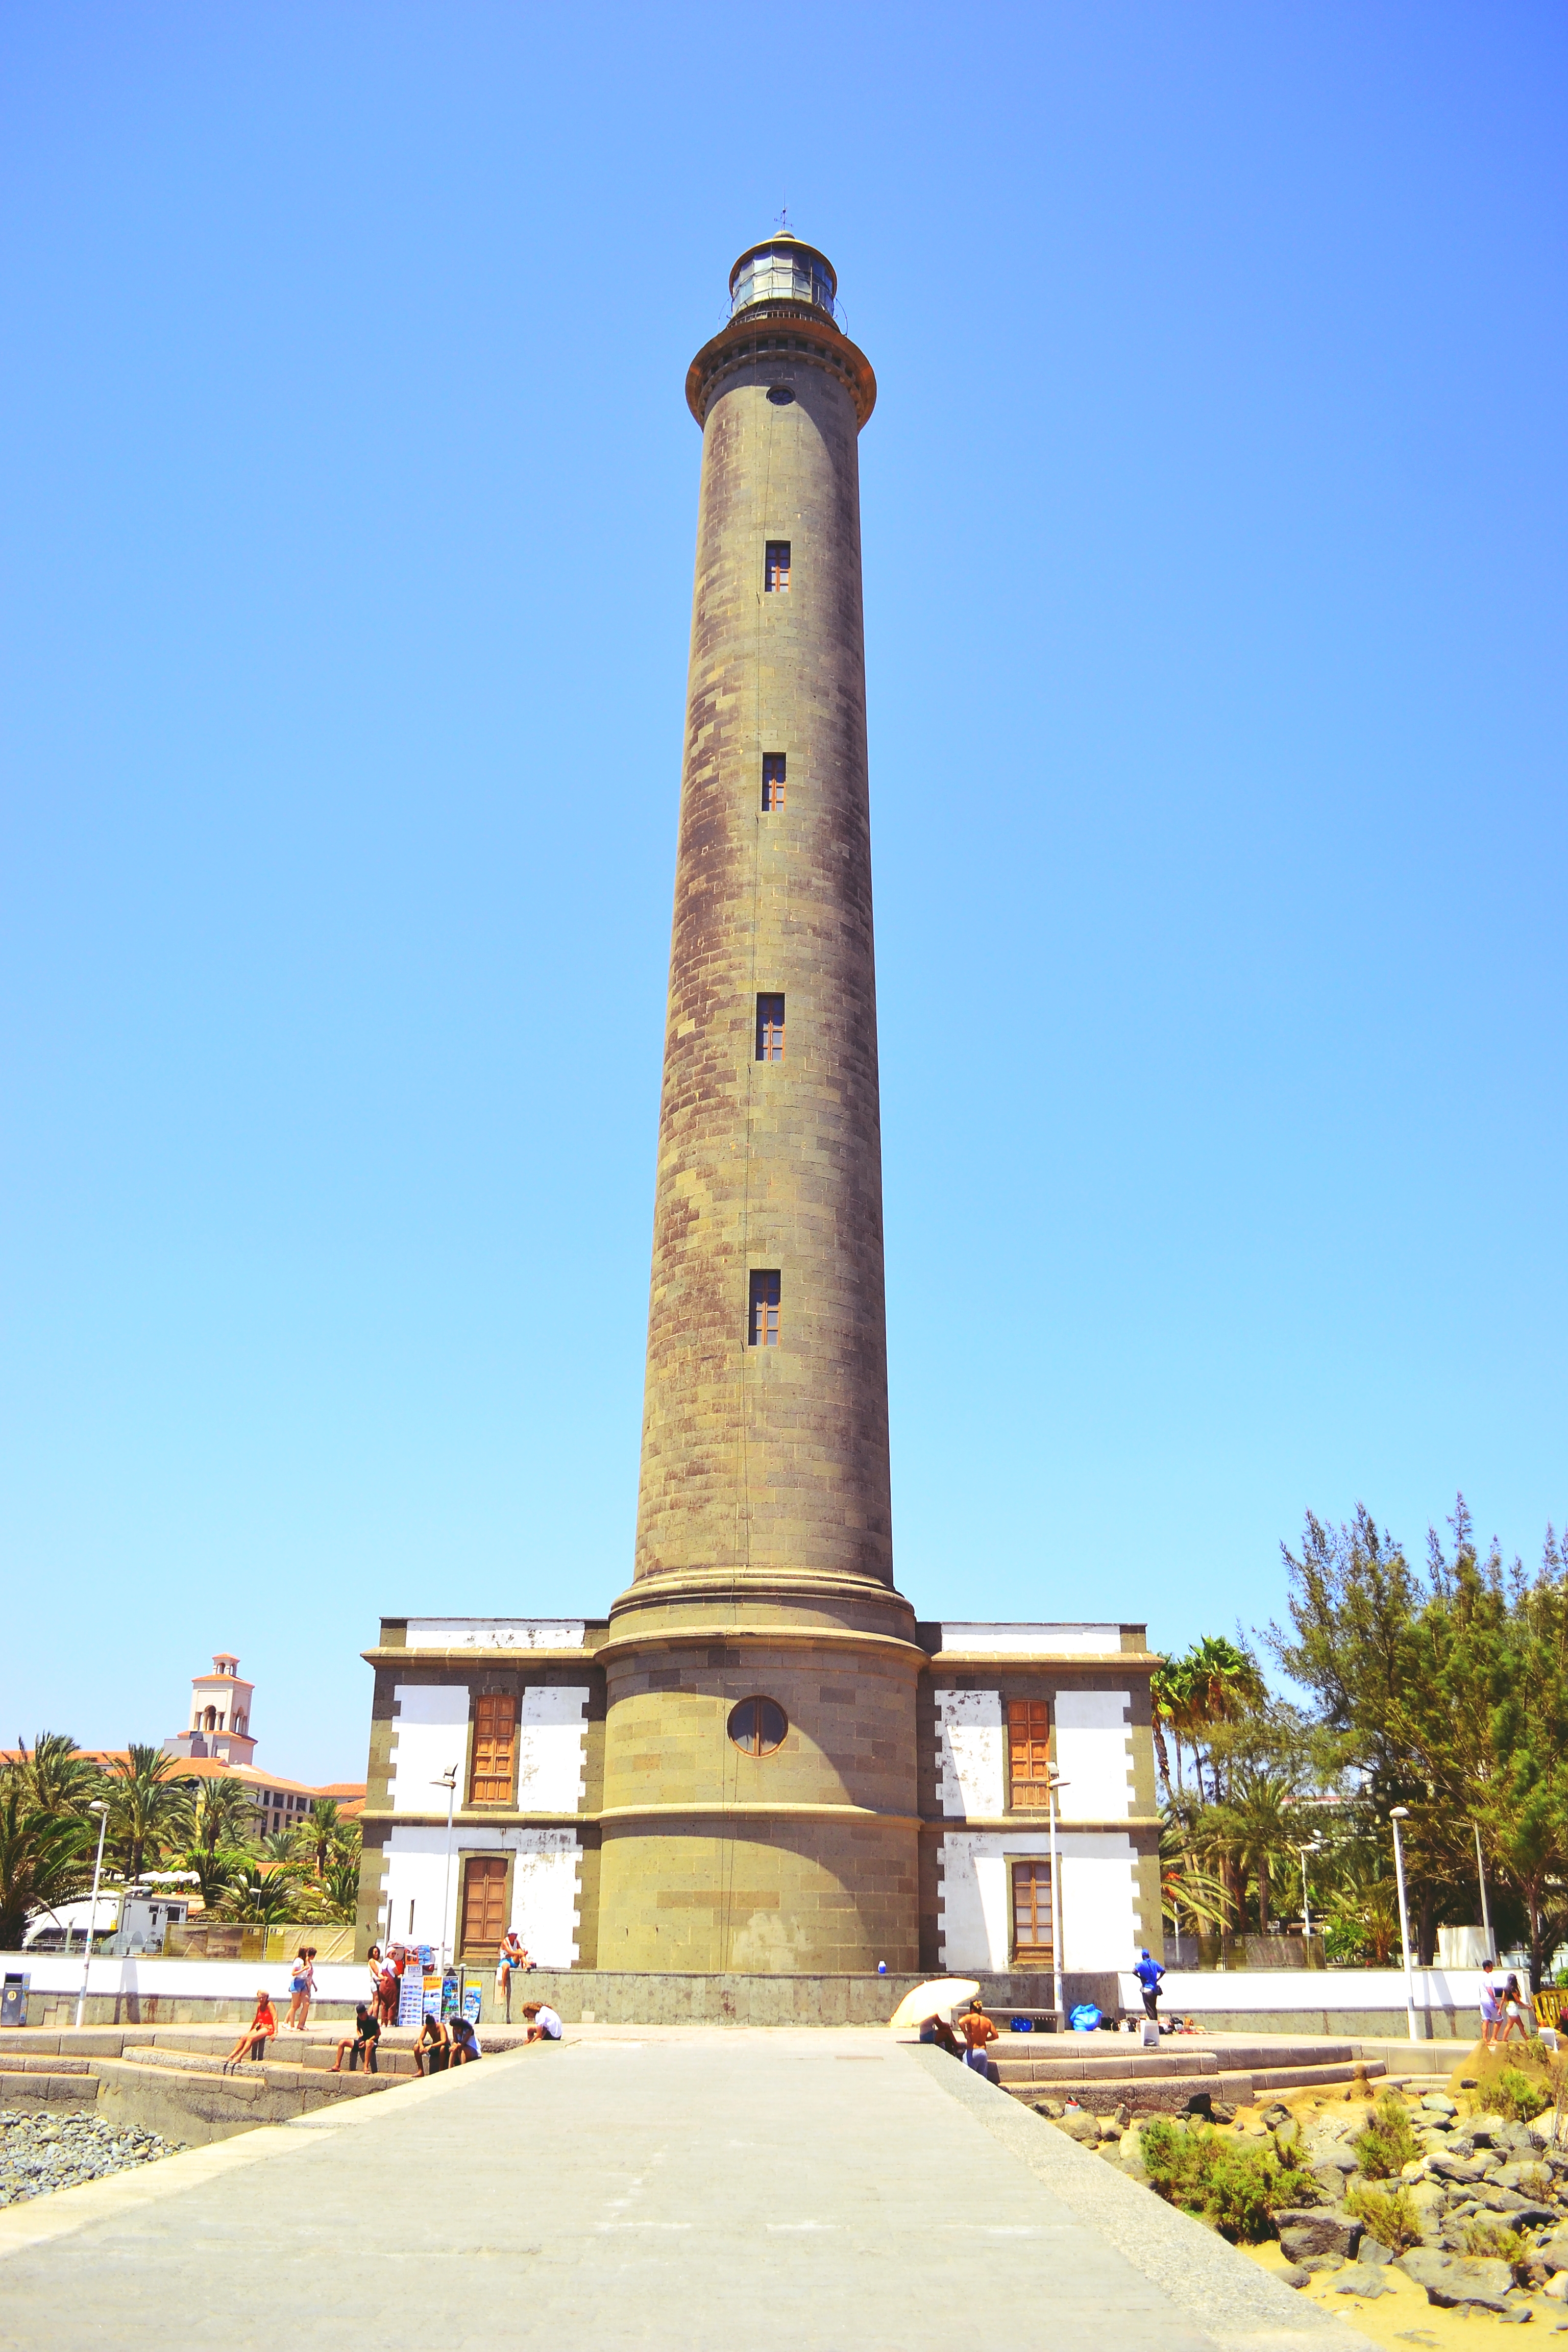 Maspalomas Lighthouse